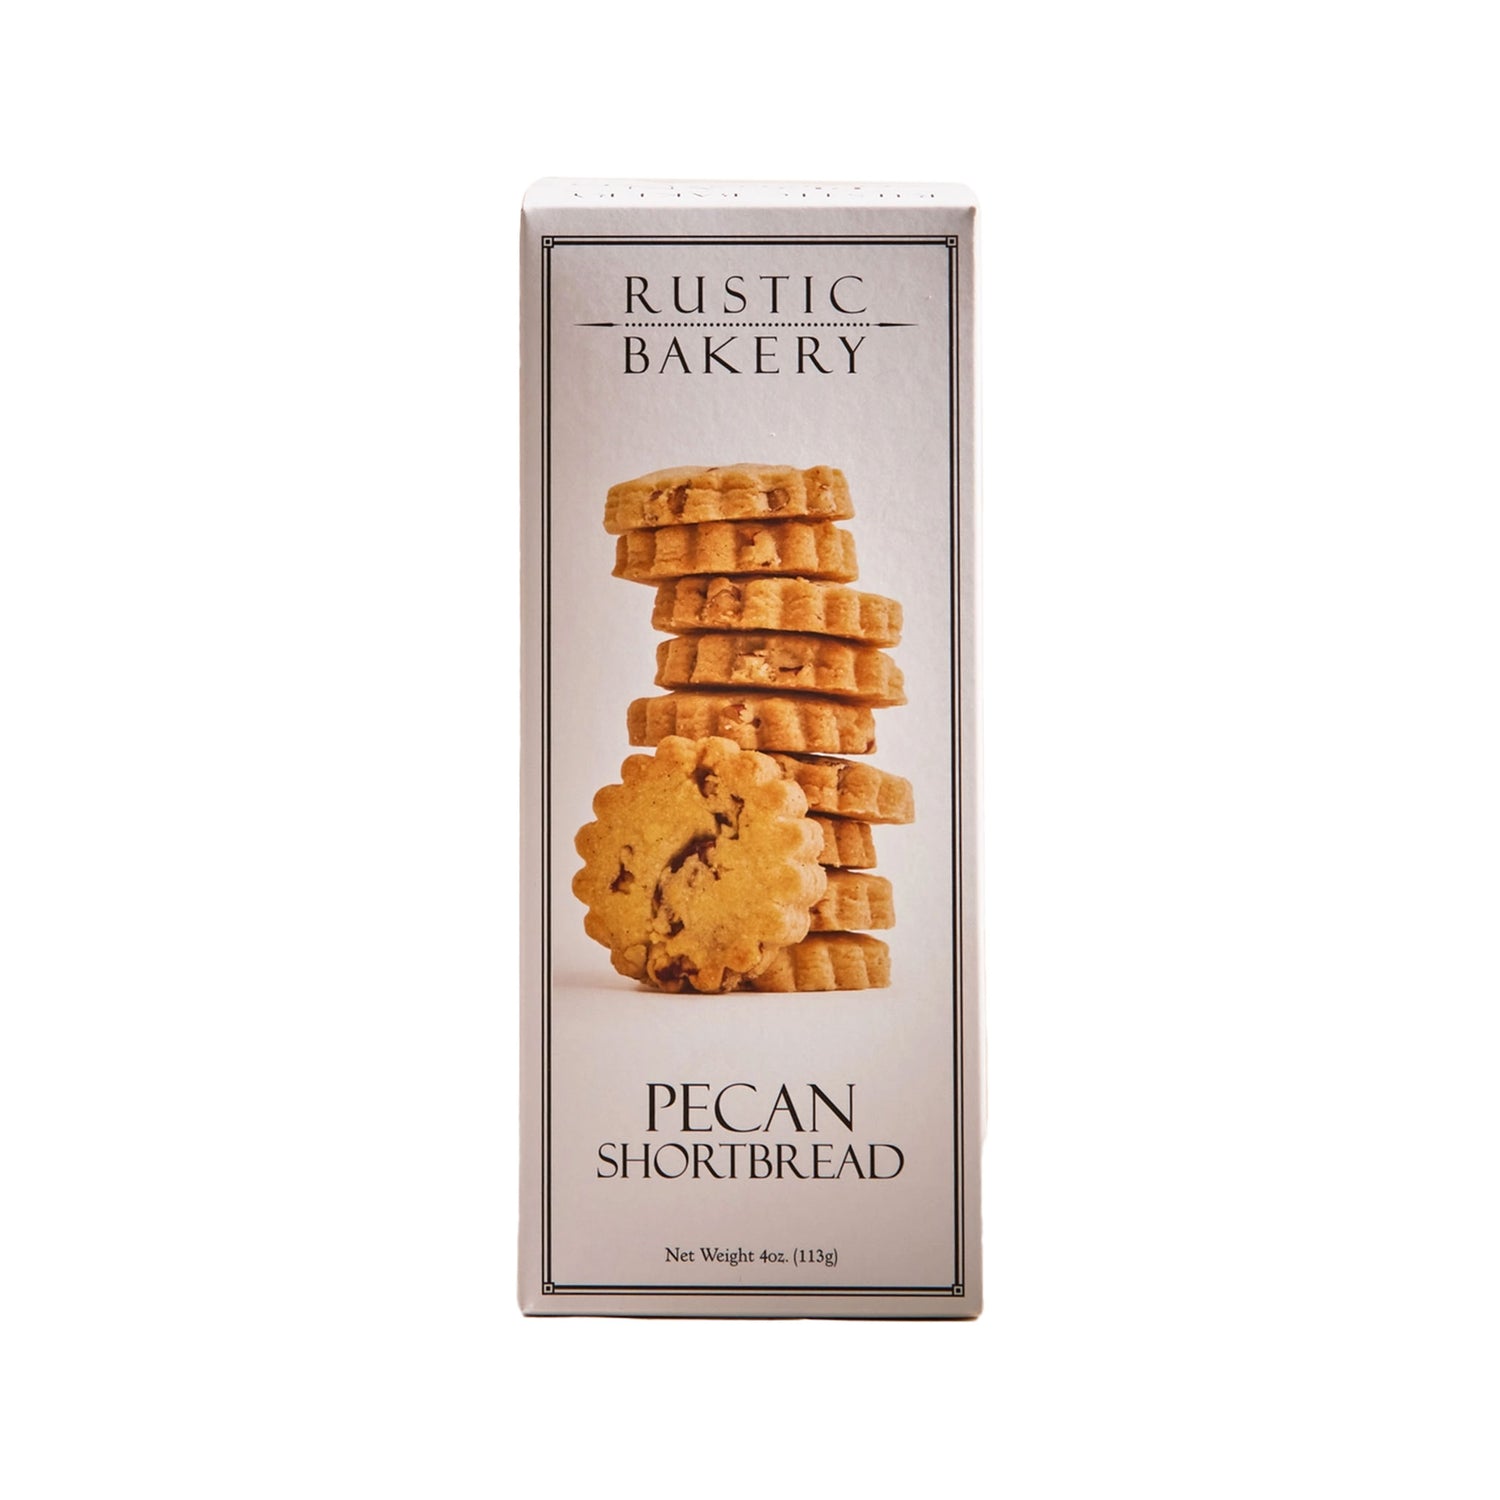 Rustic Bakery - Pecan Shortbread Cookies